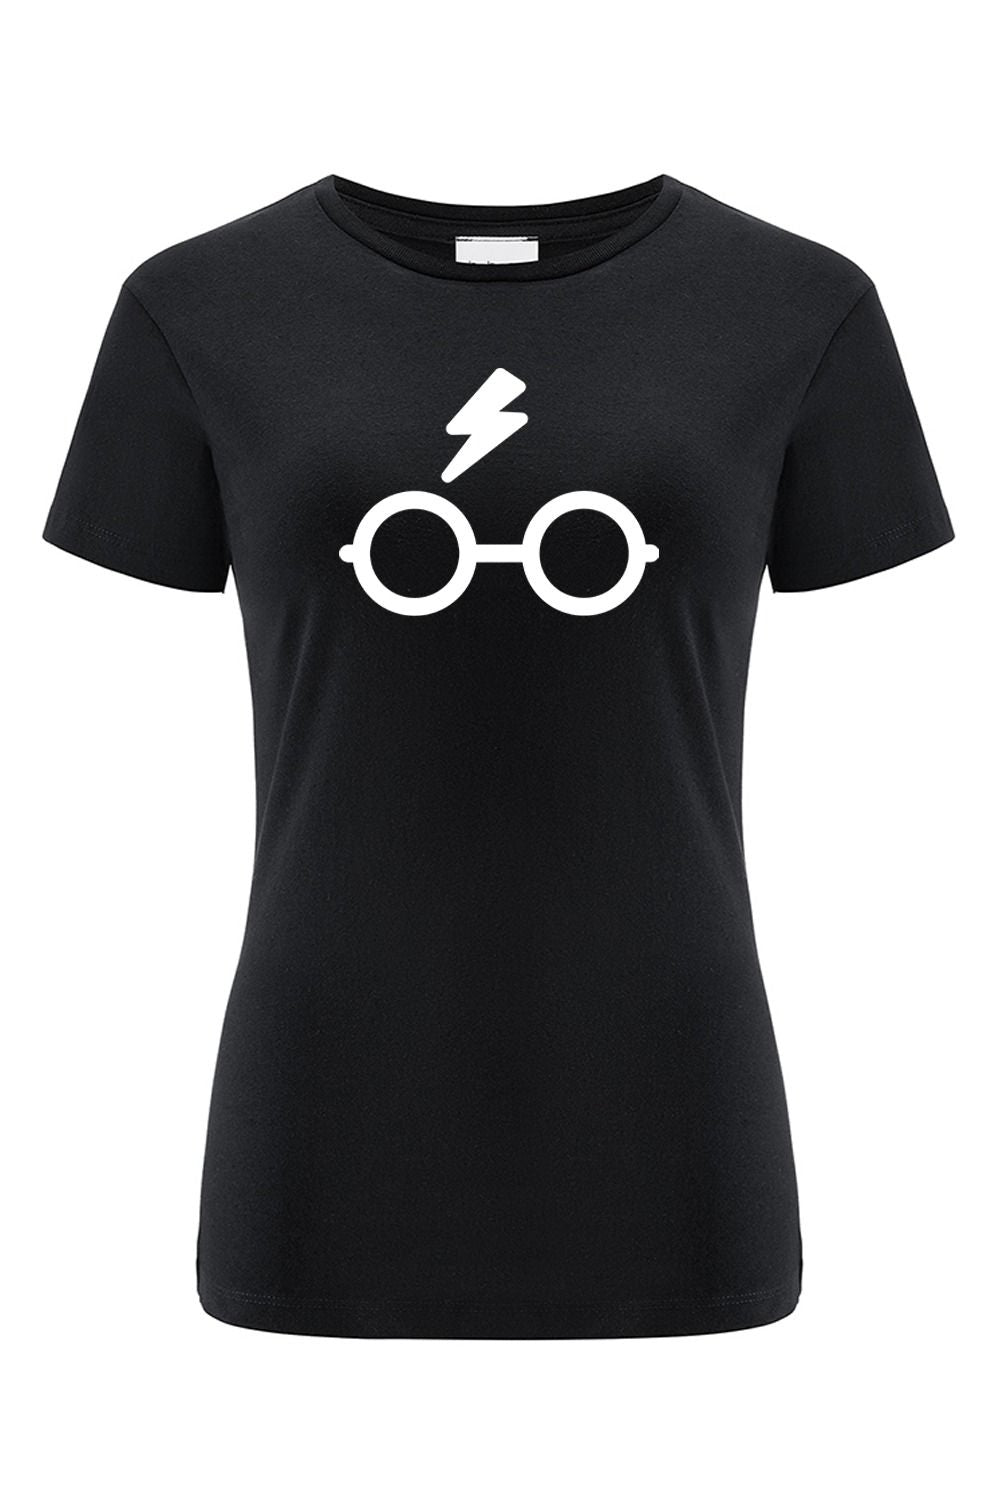 T-shirt stemma Hogwarts Harry Potter Nero LICENZE D. SICEM da Donna